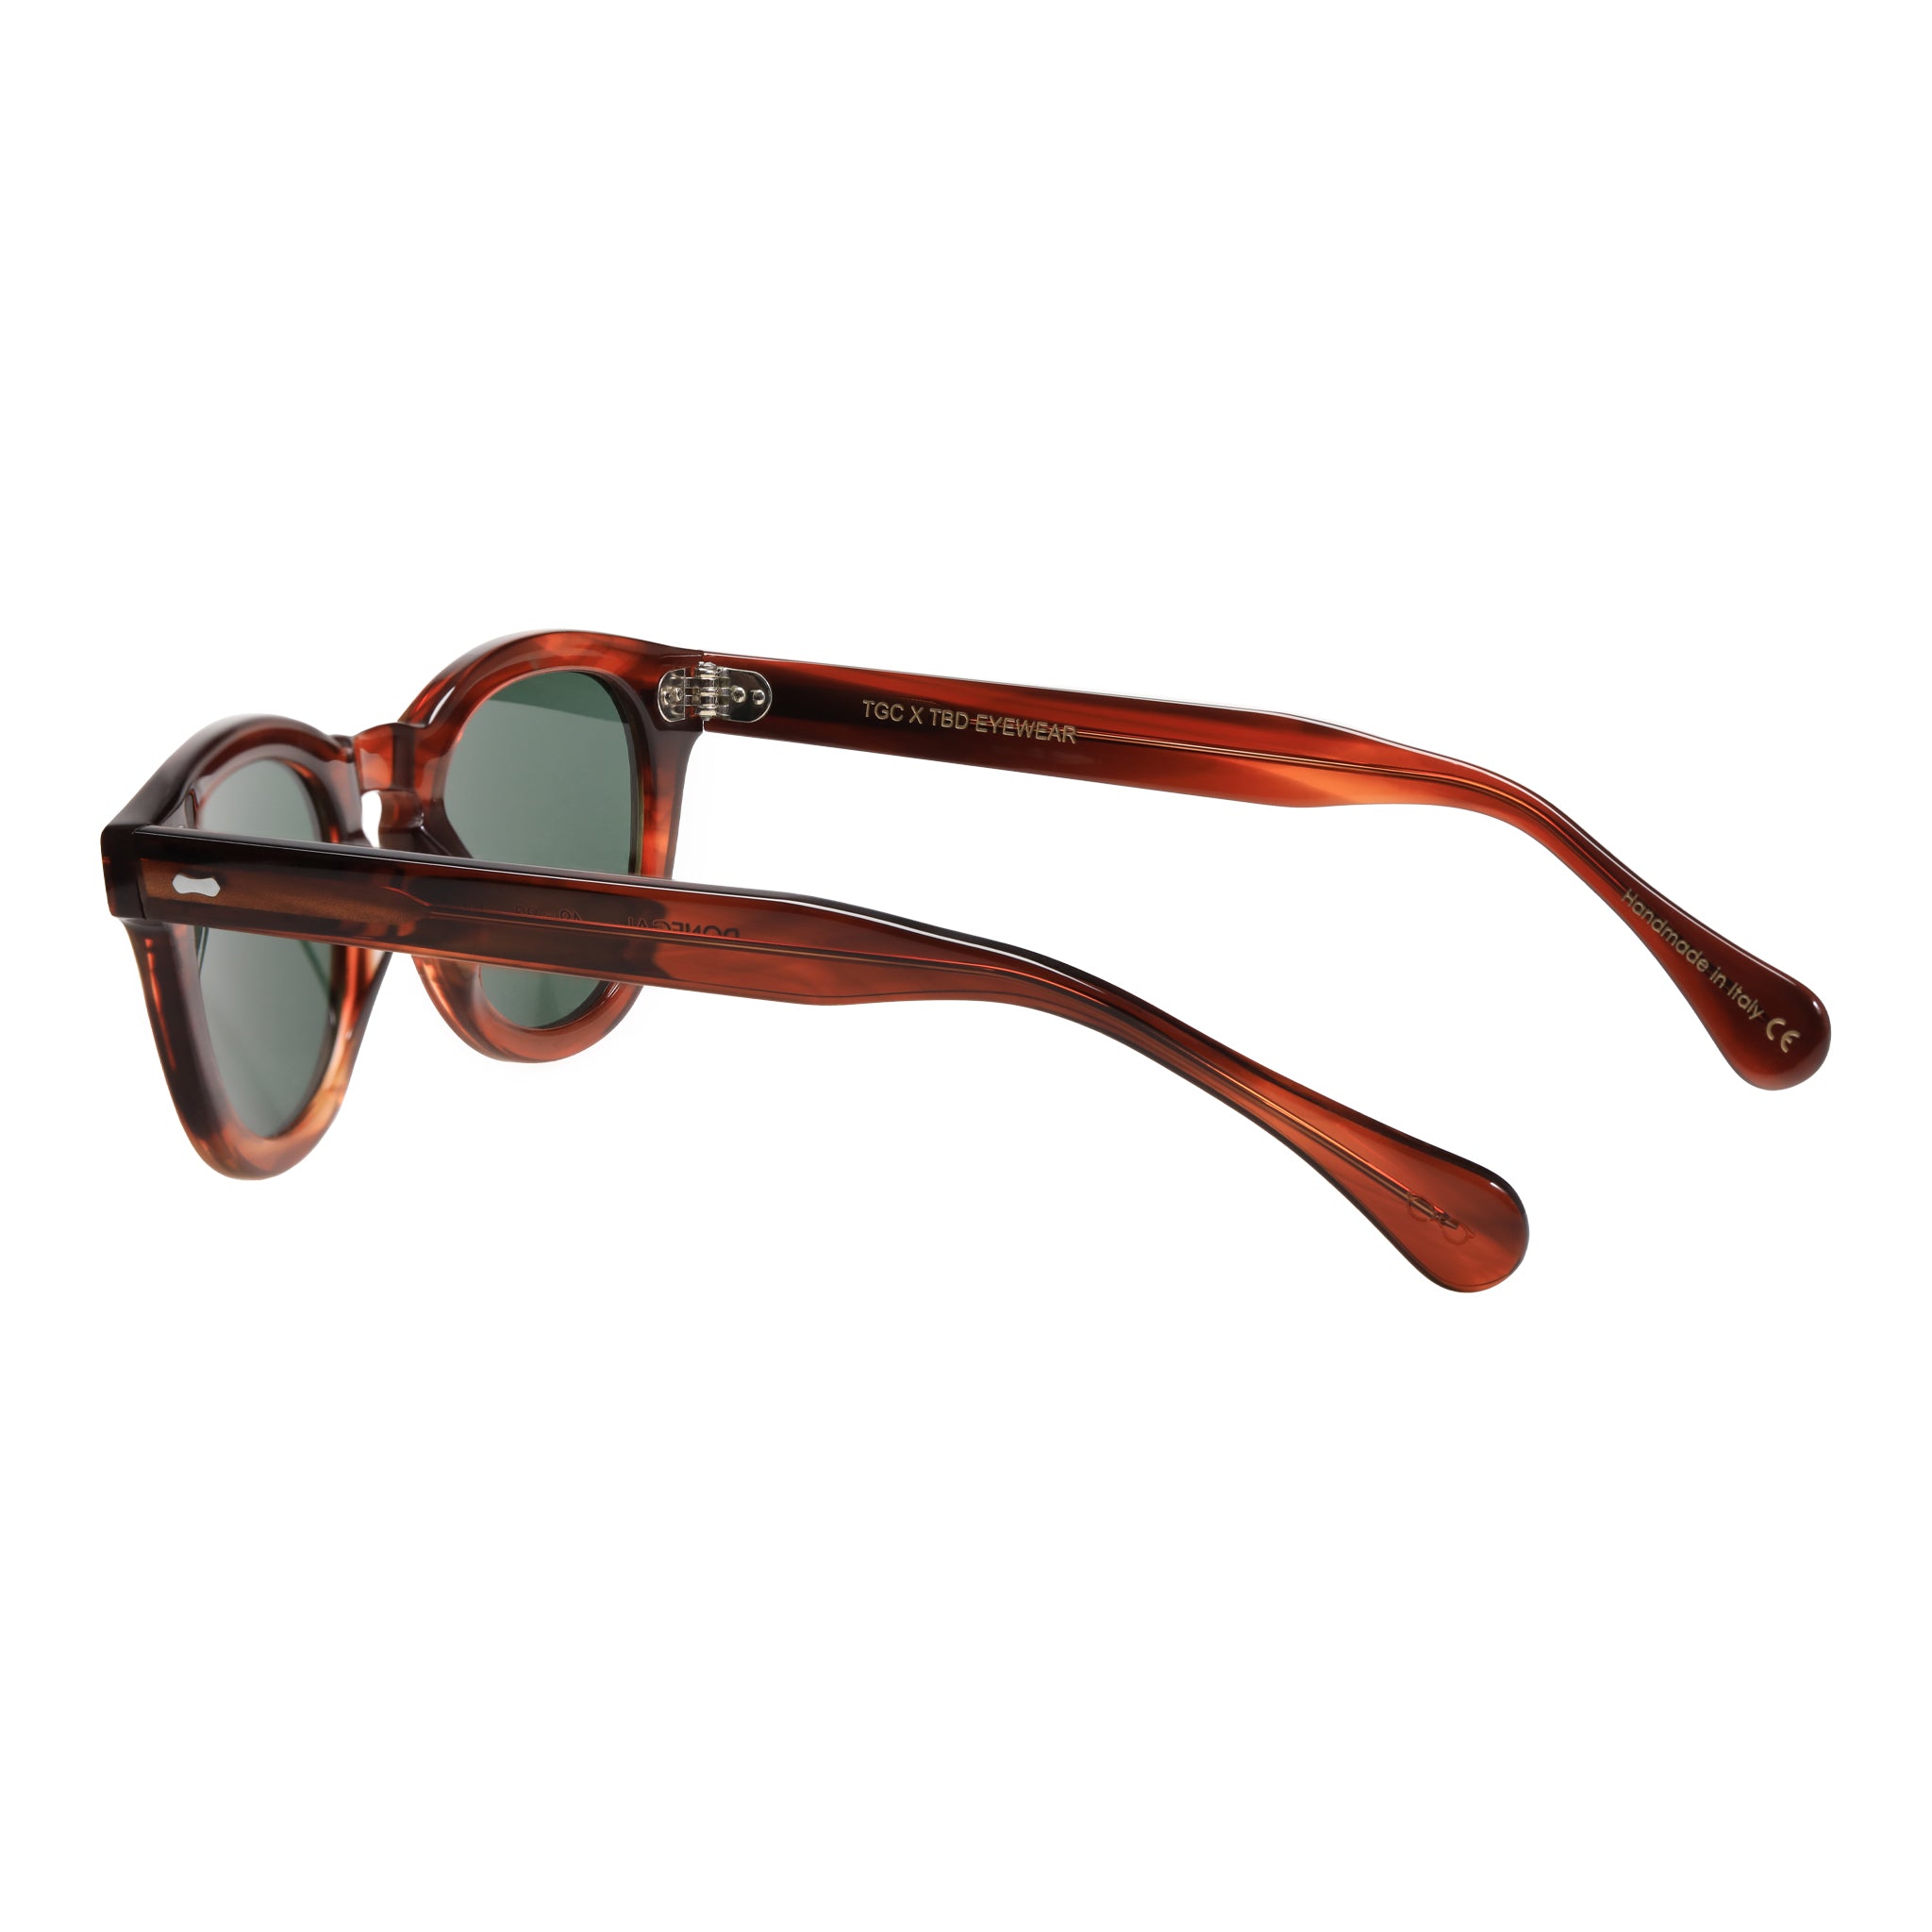 TGC X TBD Havana Sunglasses